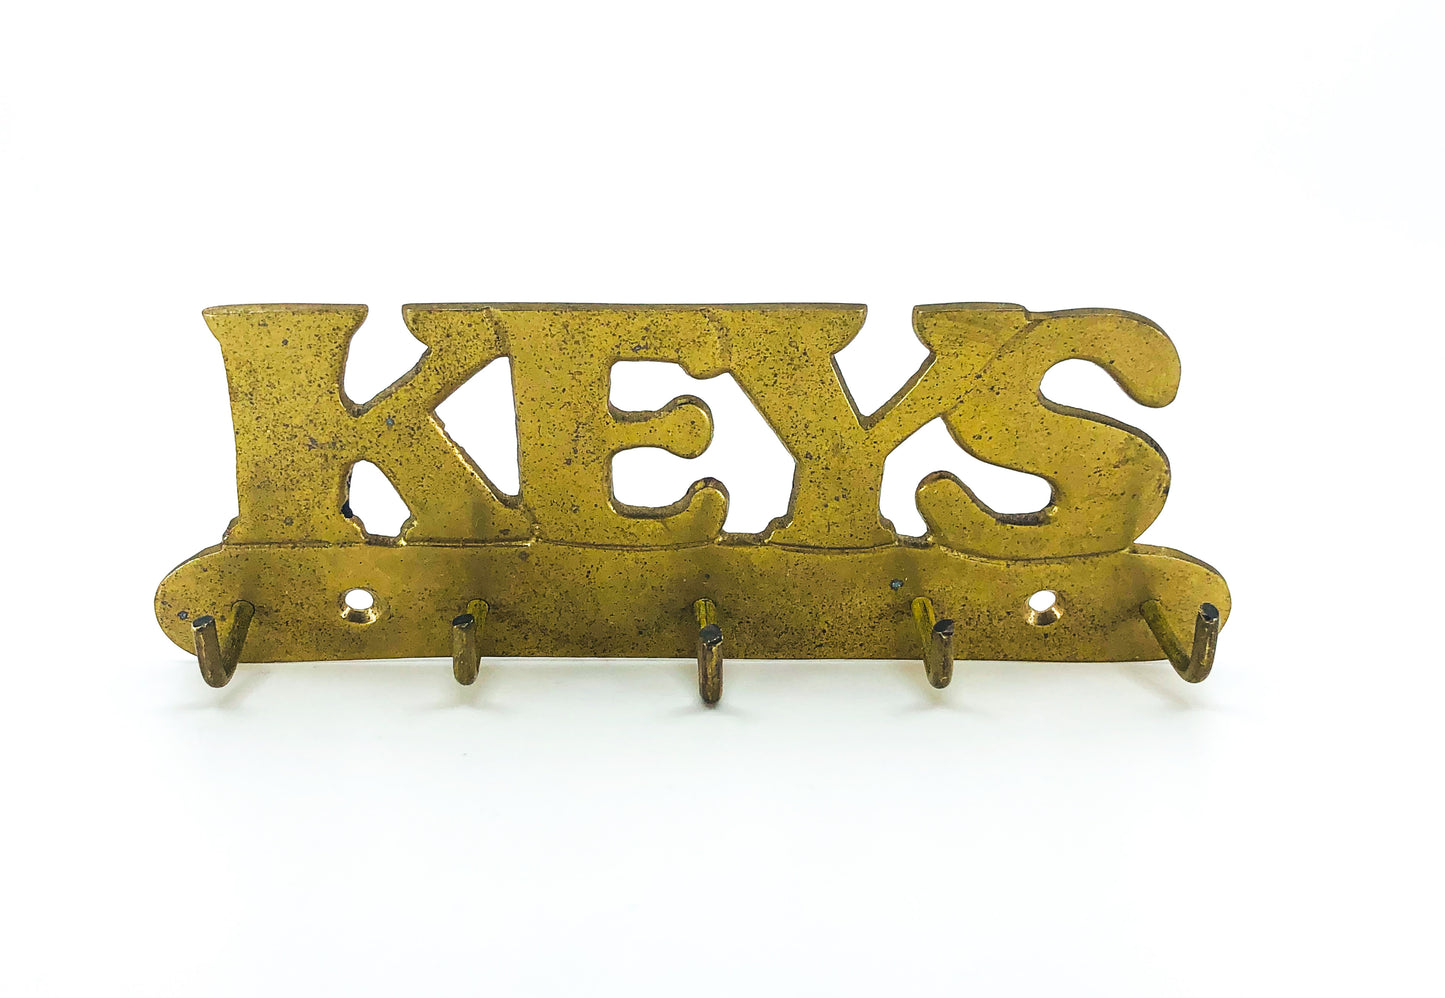 Vintage Brass “Keys” Key Hook / Holder